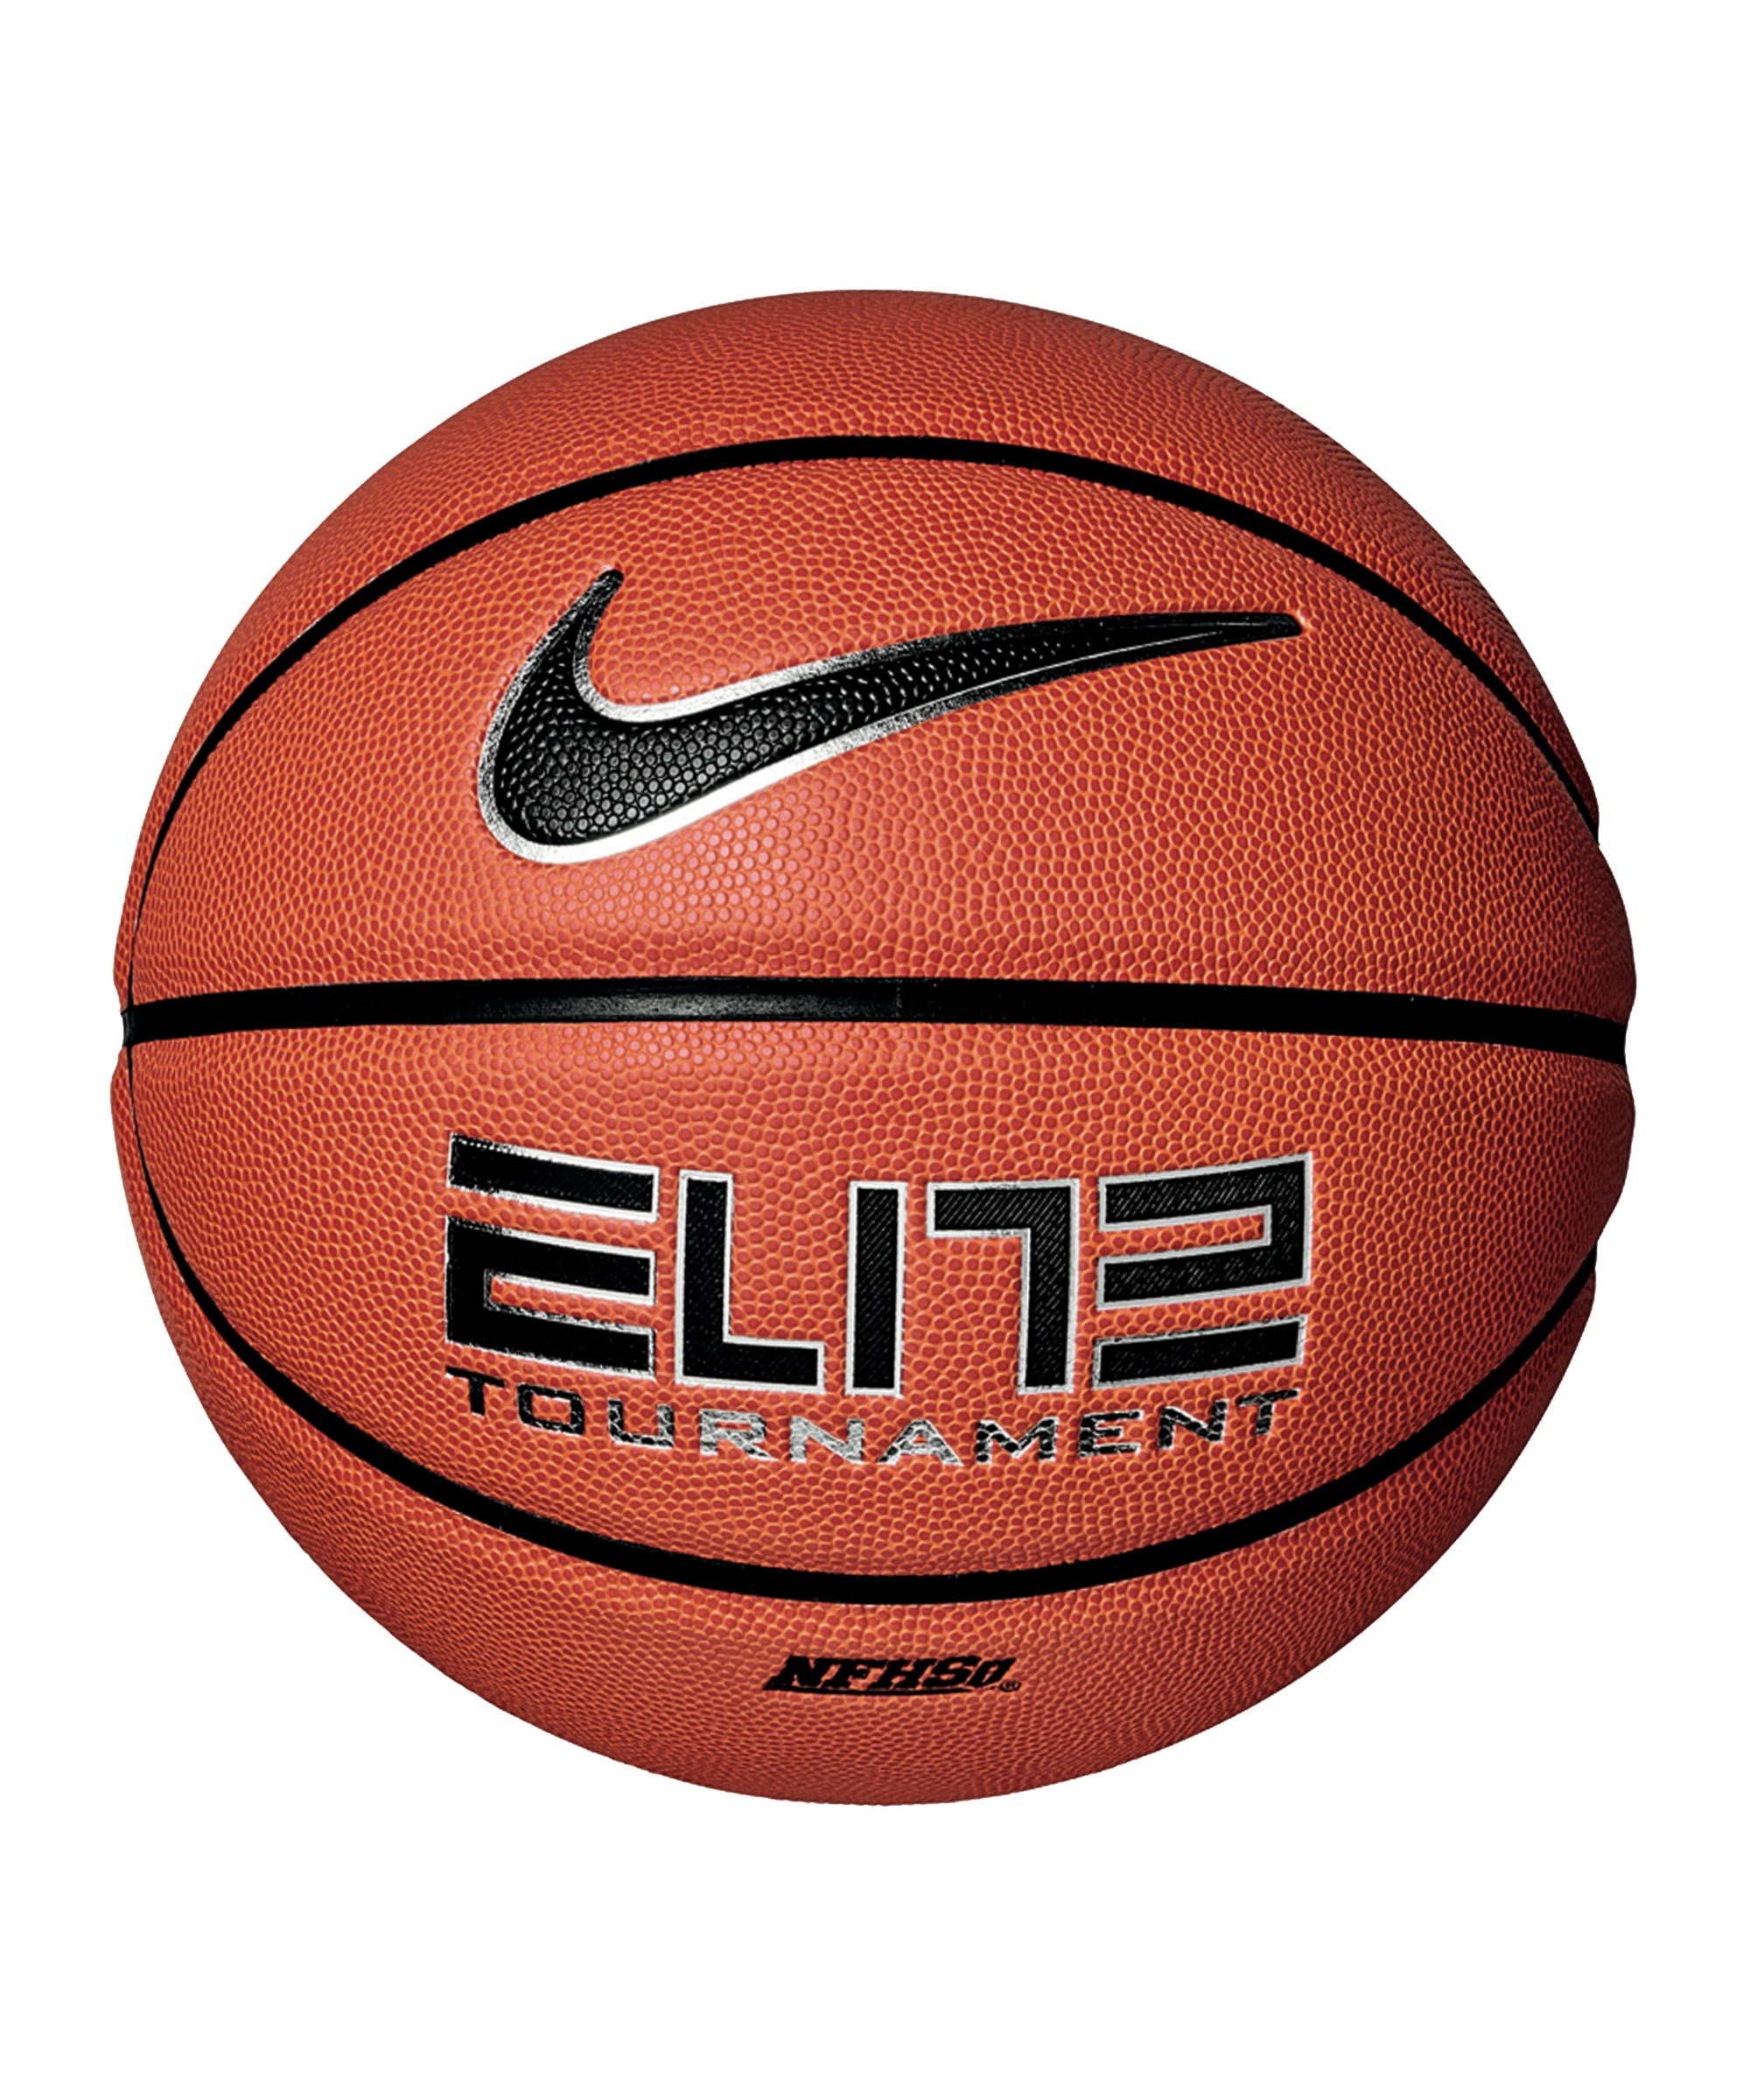 Nike Elite Tournament Basketball Braun F855N - braun